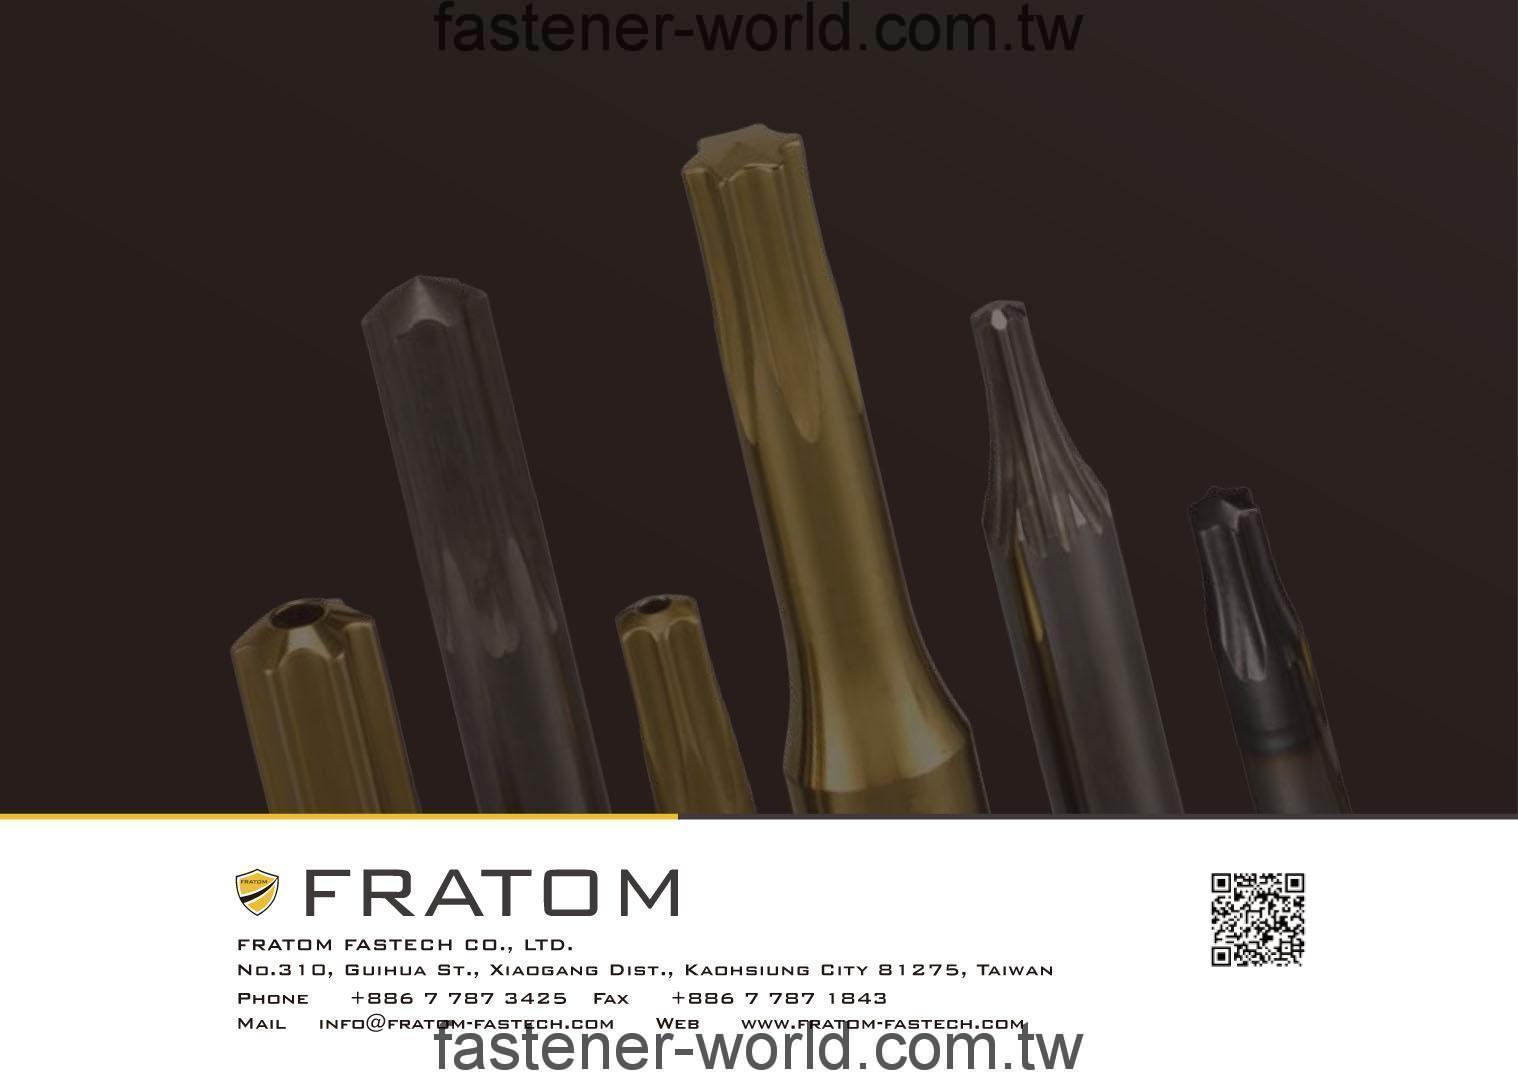 FRATOM FASTECH CO., LTD._Online Catalogues